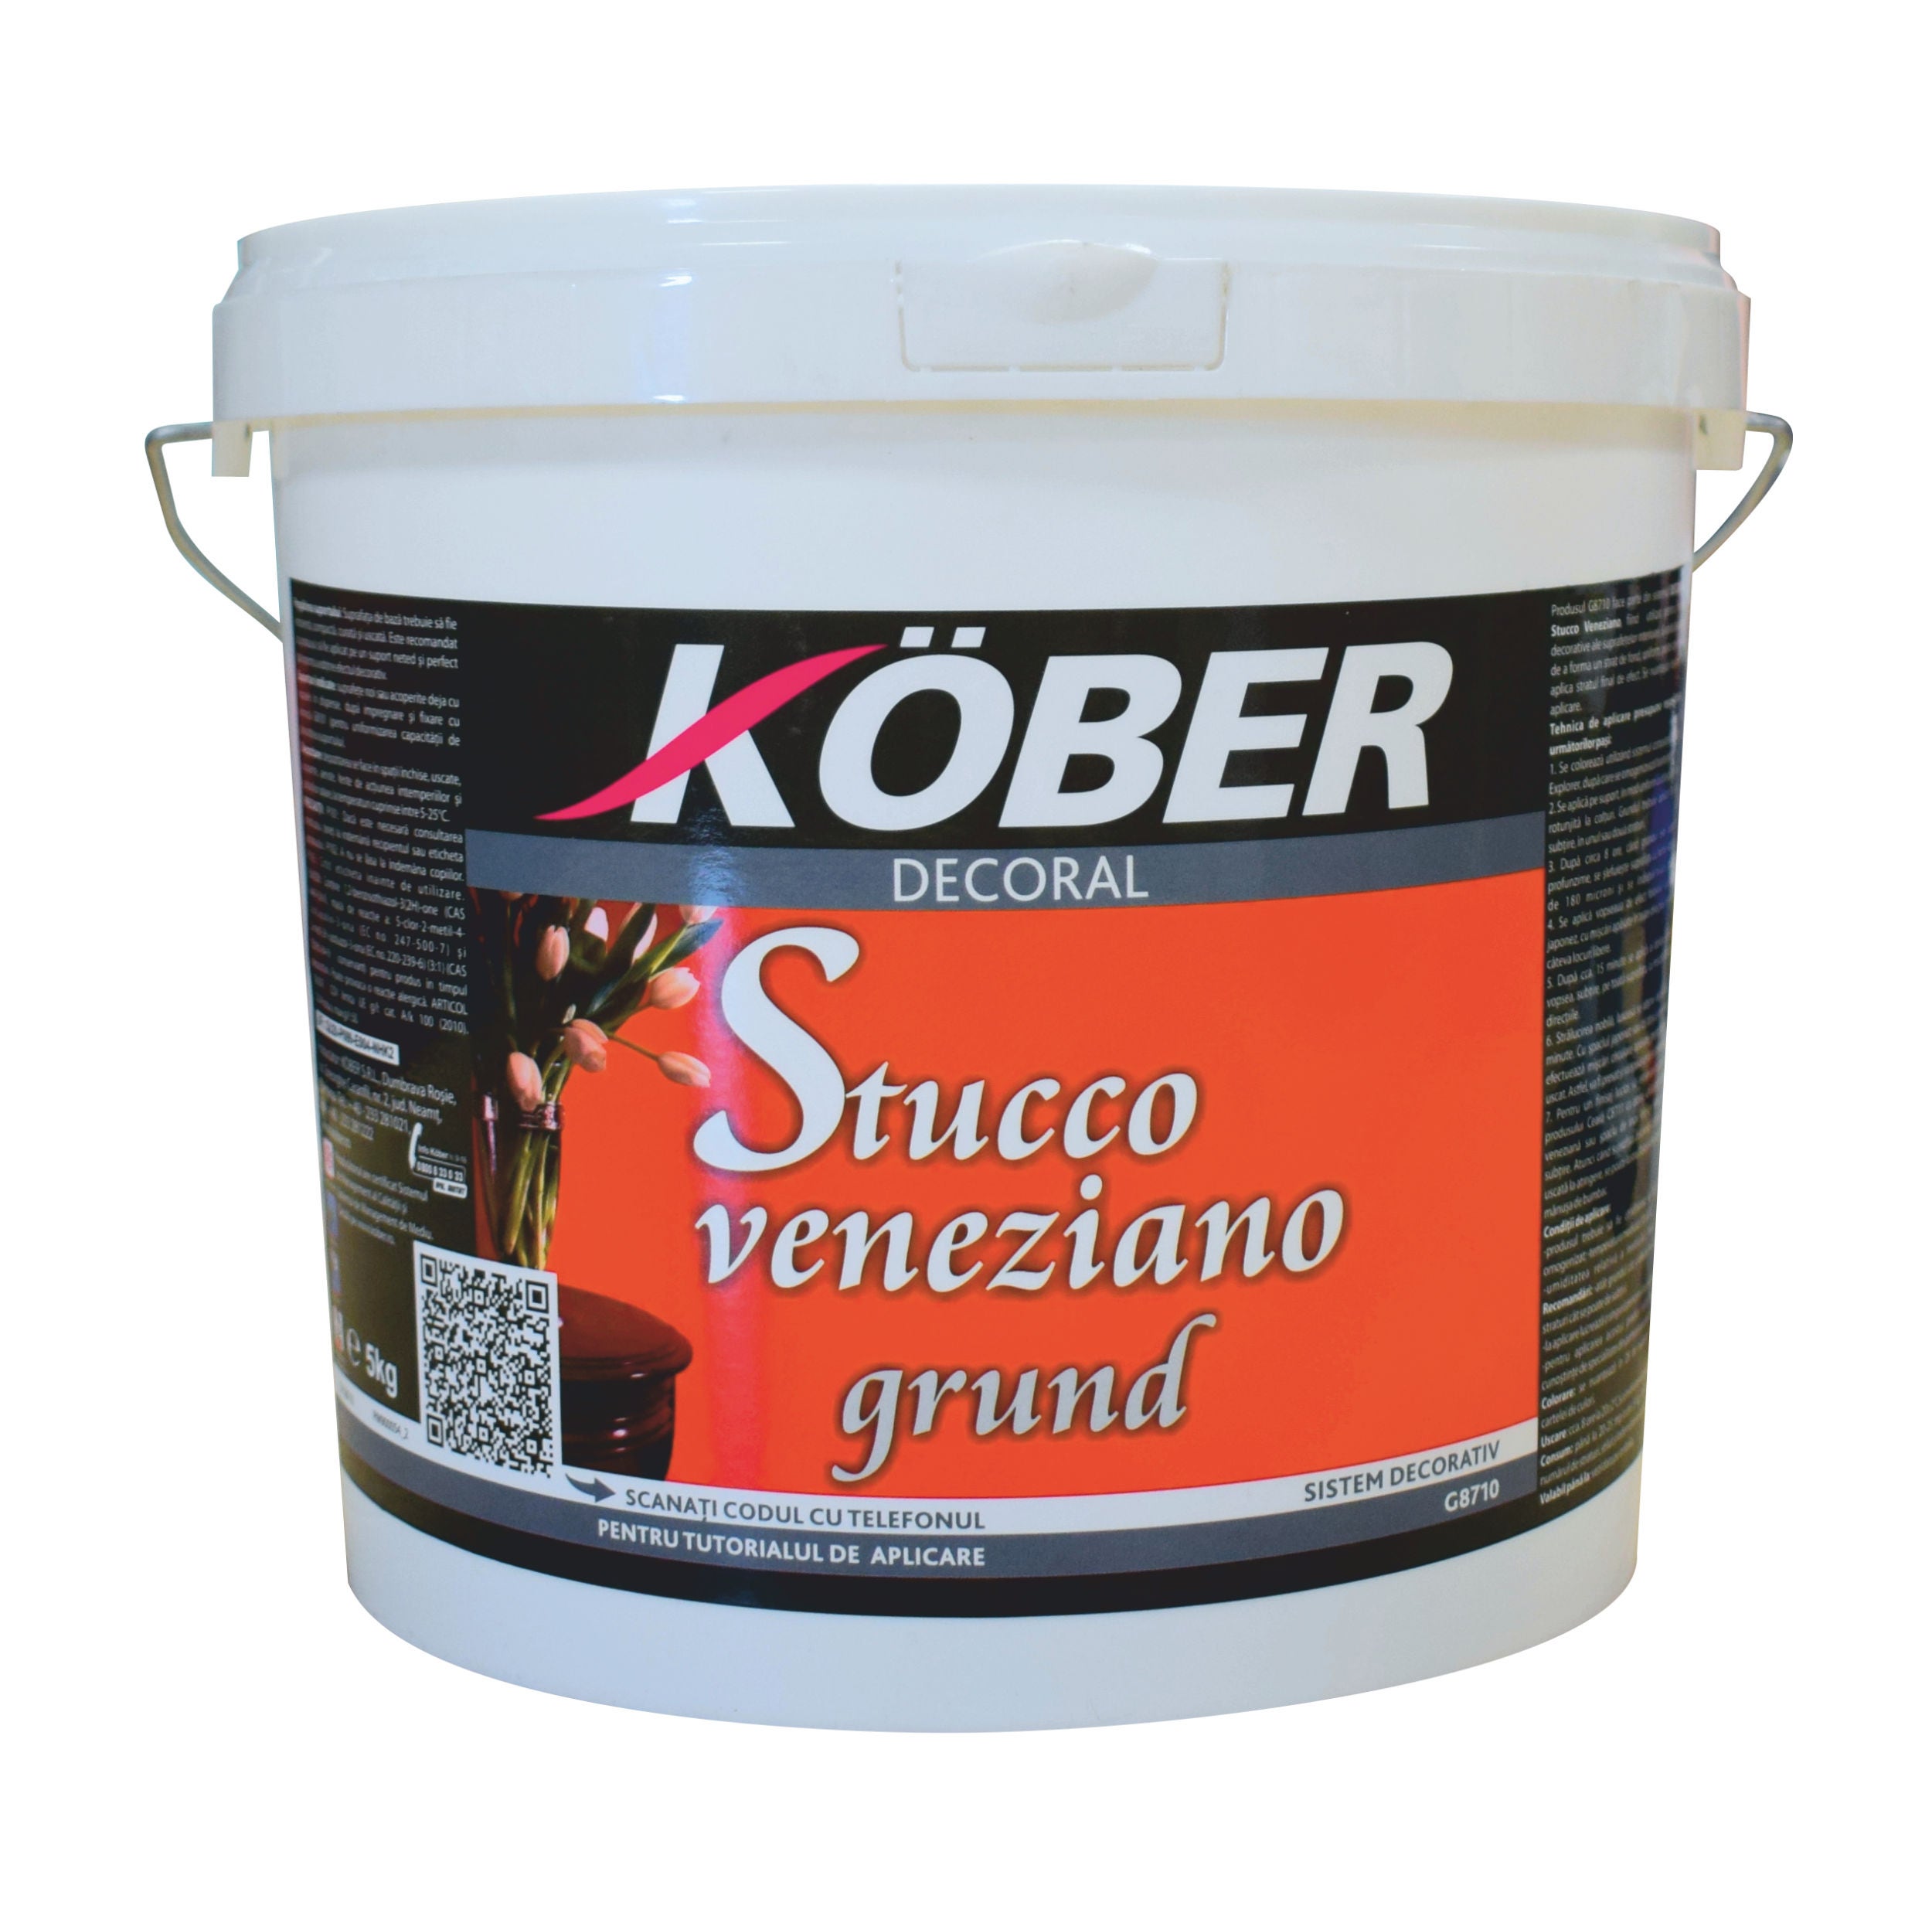 Amorsa perete Kober Stucco Veneziano G8710, interior, galben lamaie, 5 kg